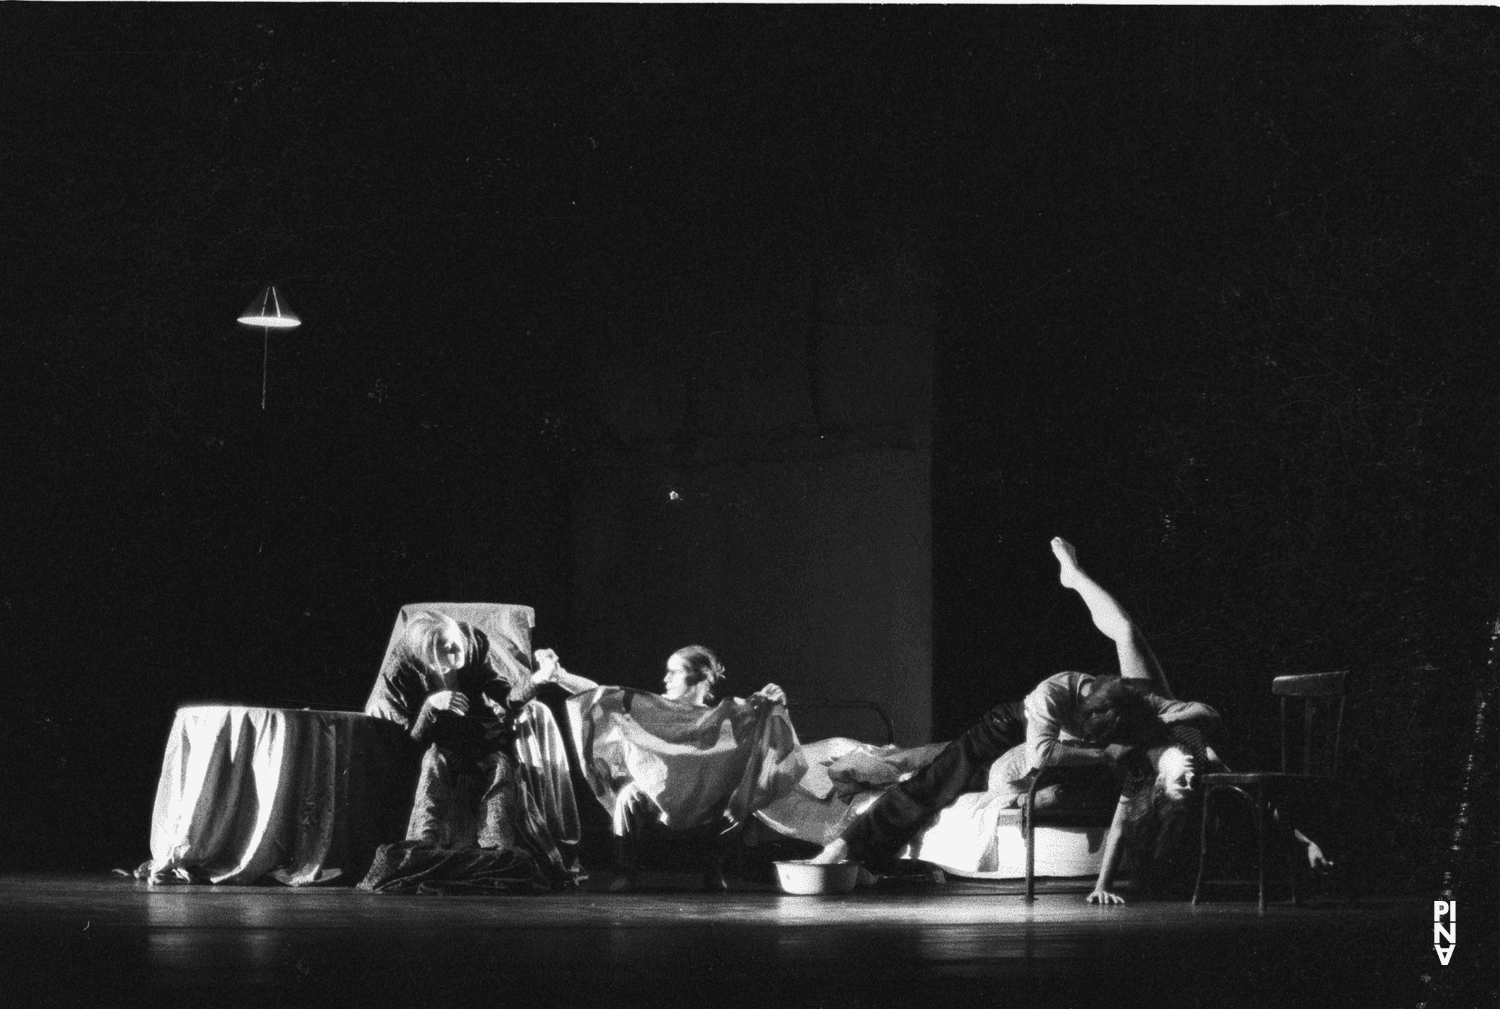 Charlotte Butler, Jan Minařík and Malou Airaudo in “Fritz” by Pina Bausch at Opernhaus Wuppertal